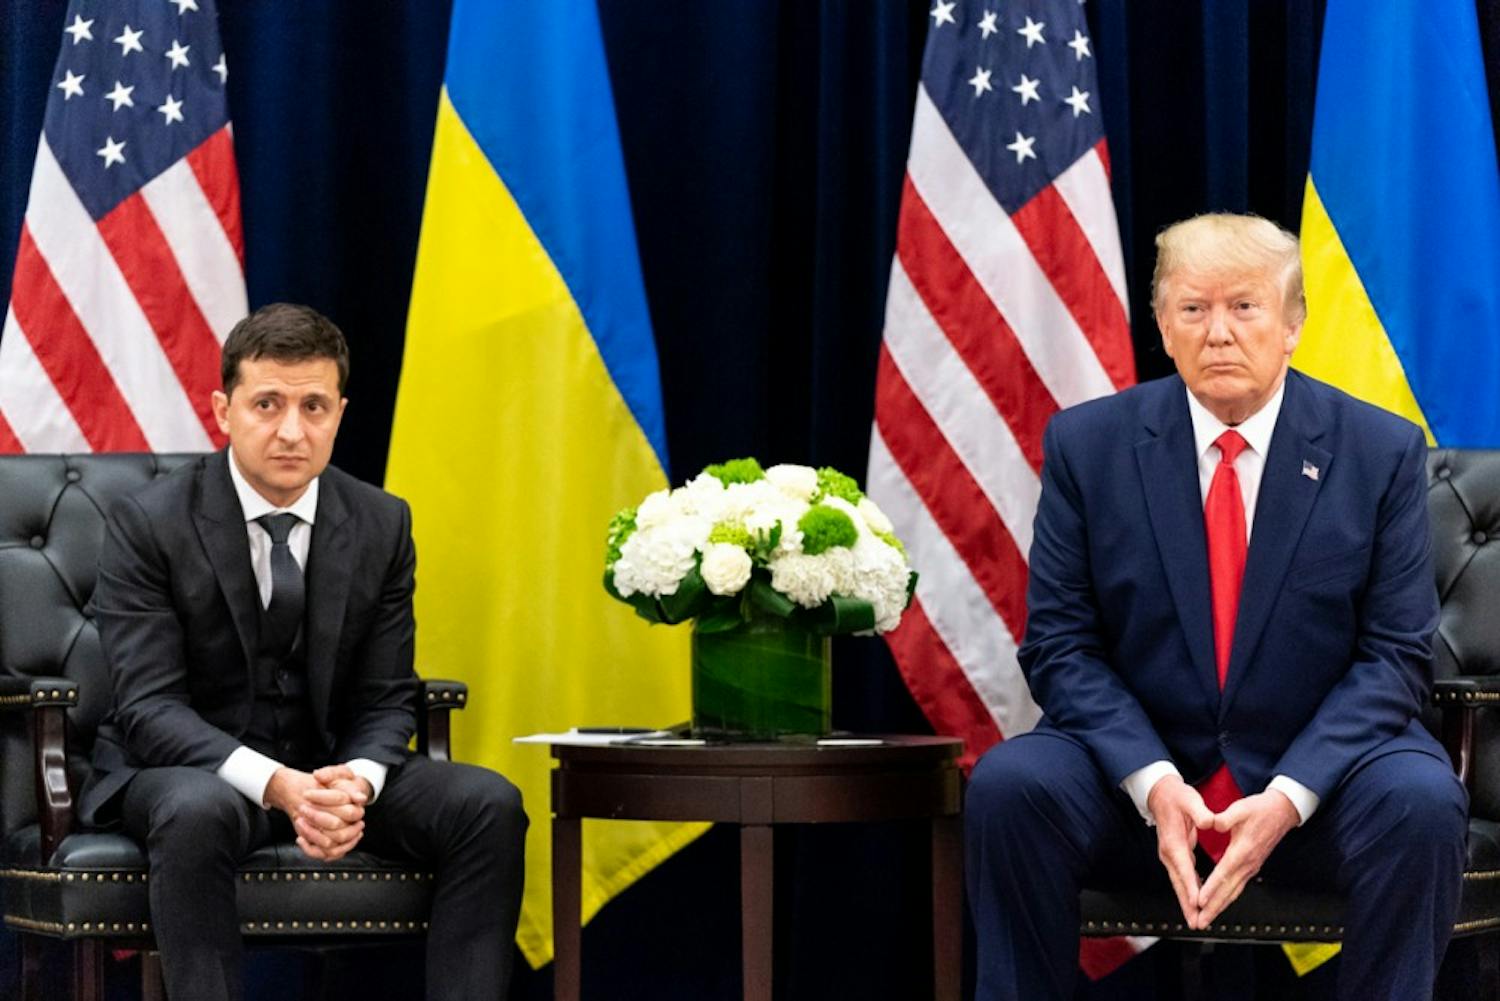 Ukrainian President Volodymyr Zelensky and U.S. President Donald Trump 